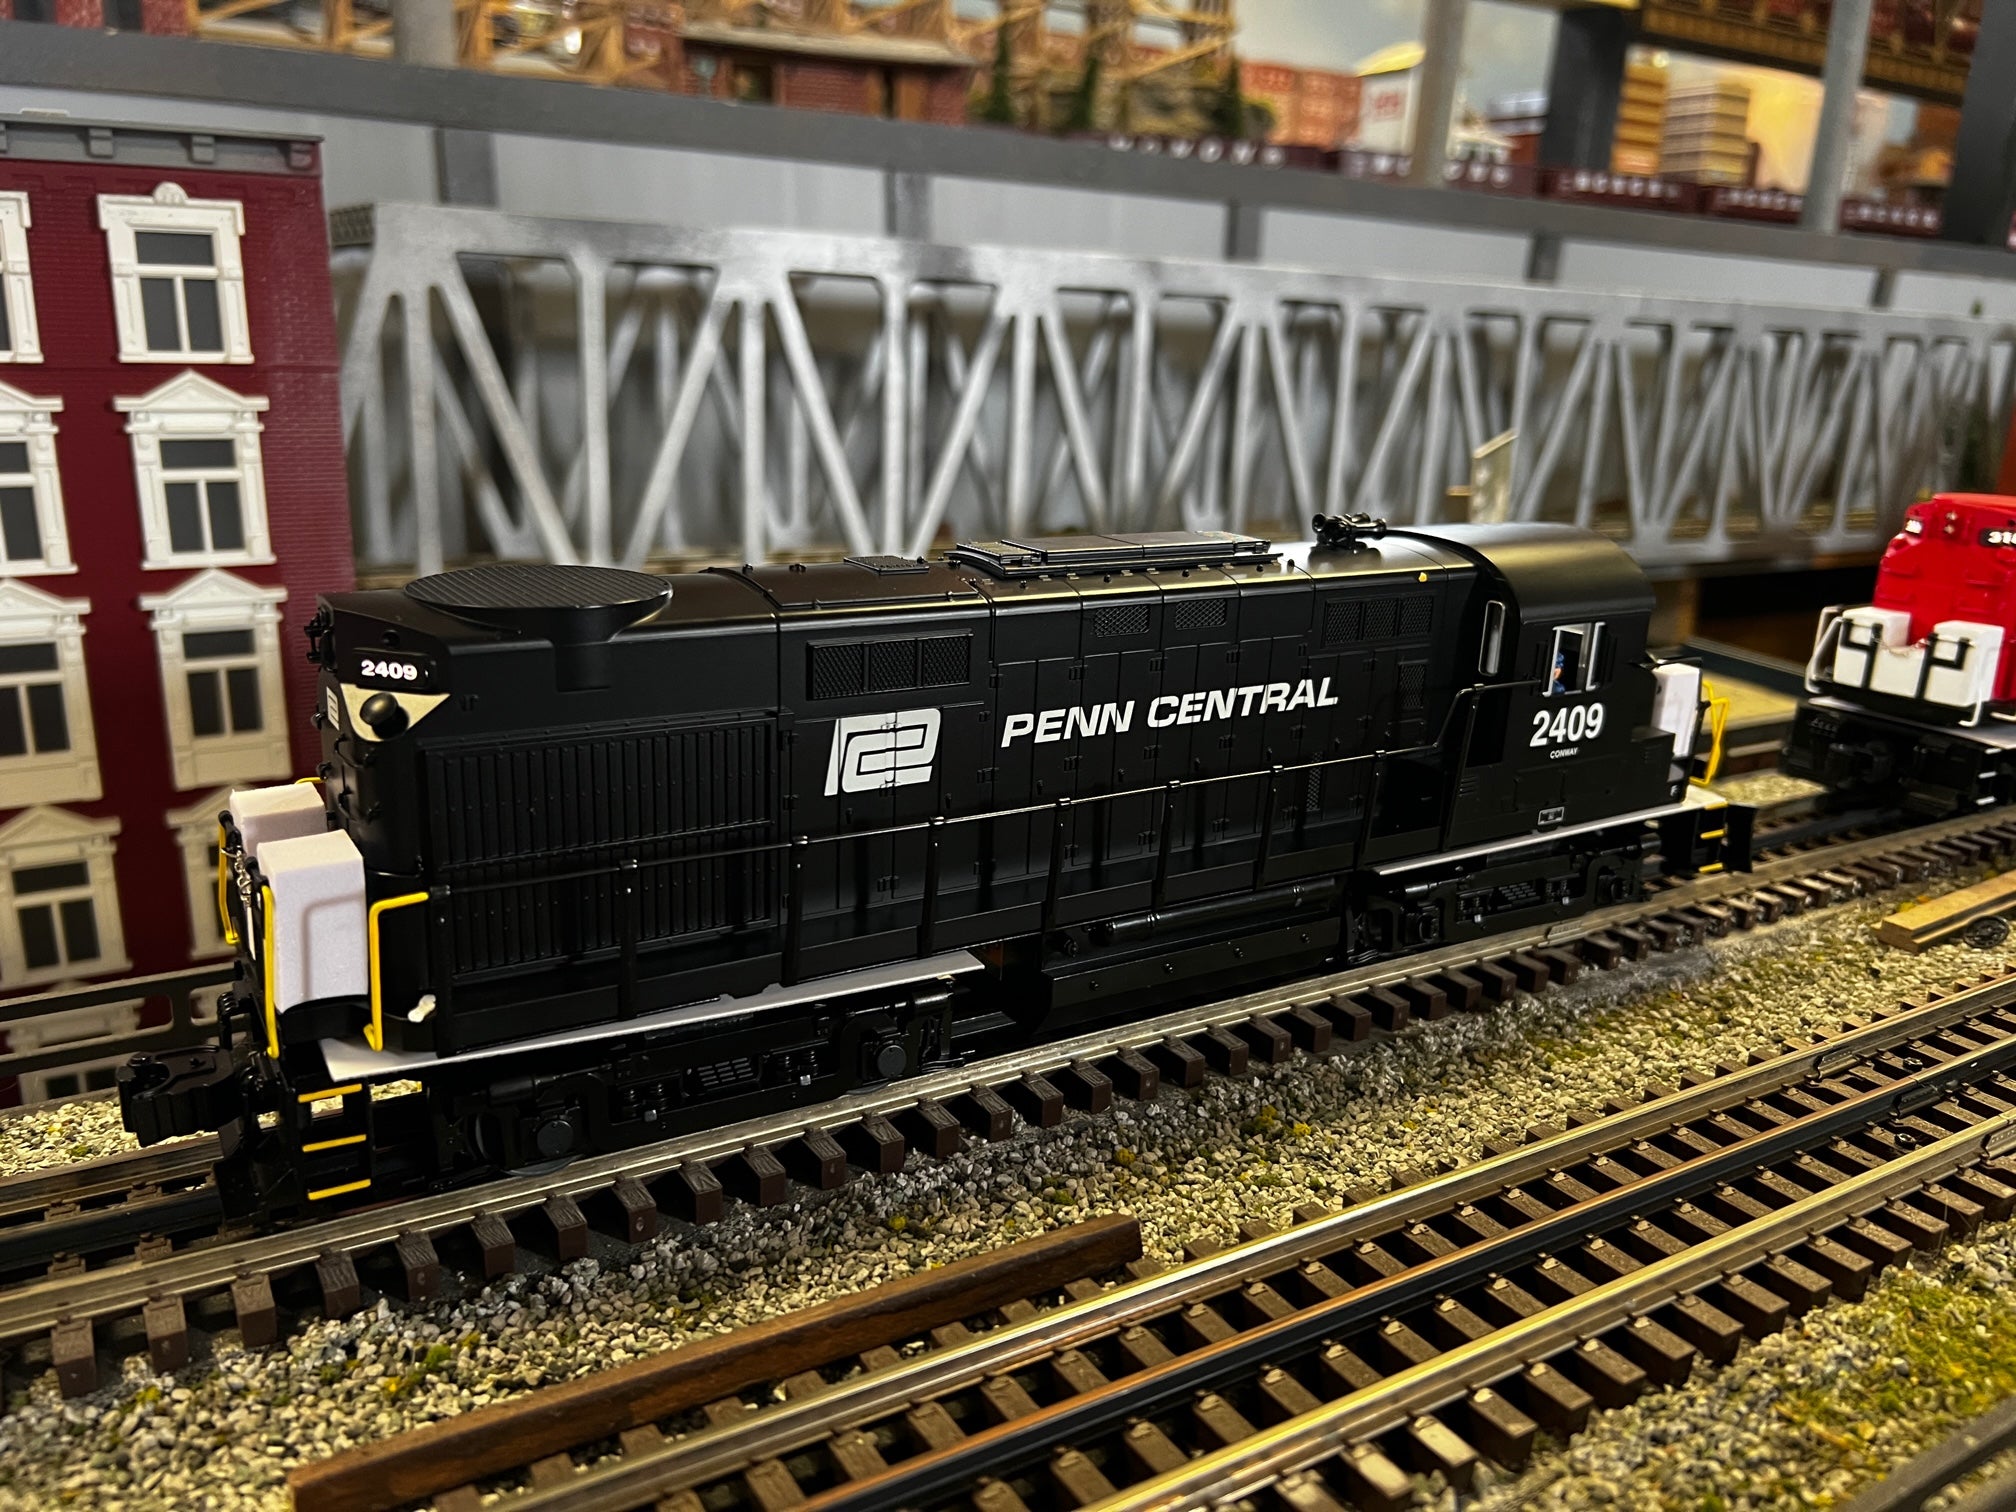 Lionel 2233362 - Legacy RS-27 Diesel Locomotive "Penn Central" #2409